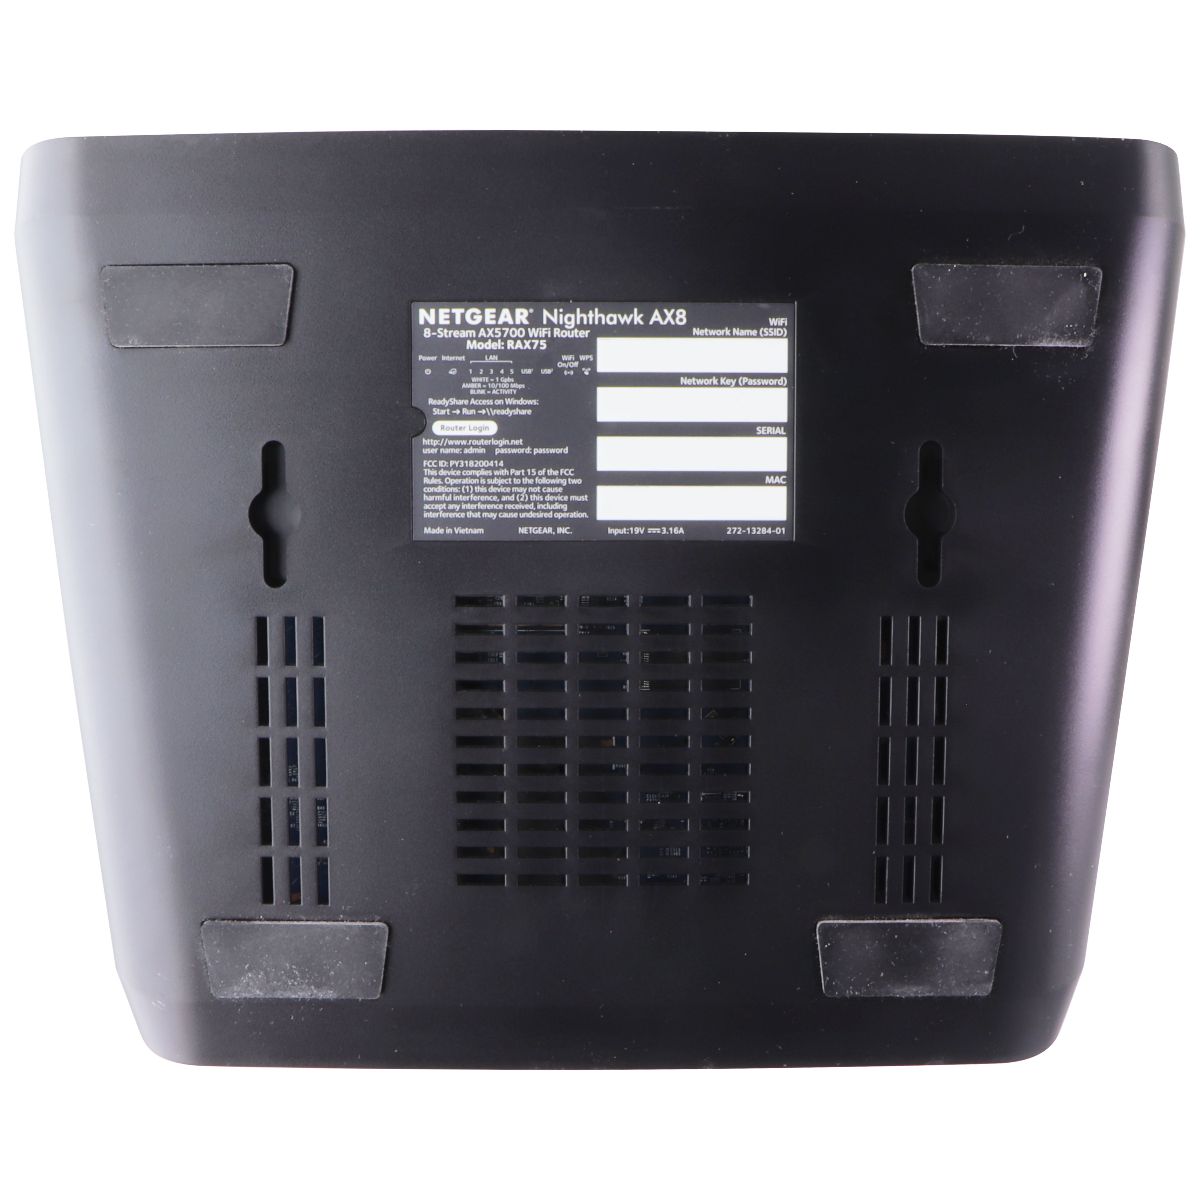 NETGEAR Nighthawk AX8 (8-Stream) AX5700 Wi-Fi 6 Router (RAX75) Networking - Wireless Wi-Fi Routers Netgear    - Simple Cell Bulk Wholesale Pricing - USA Seller